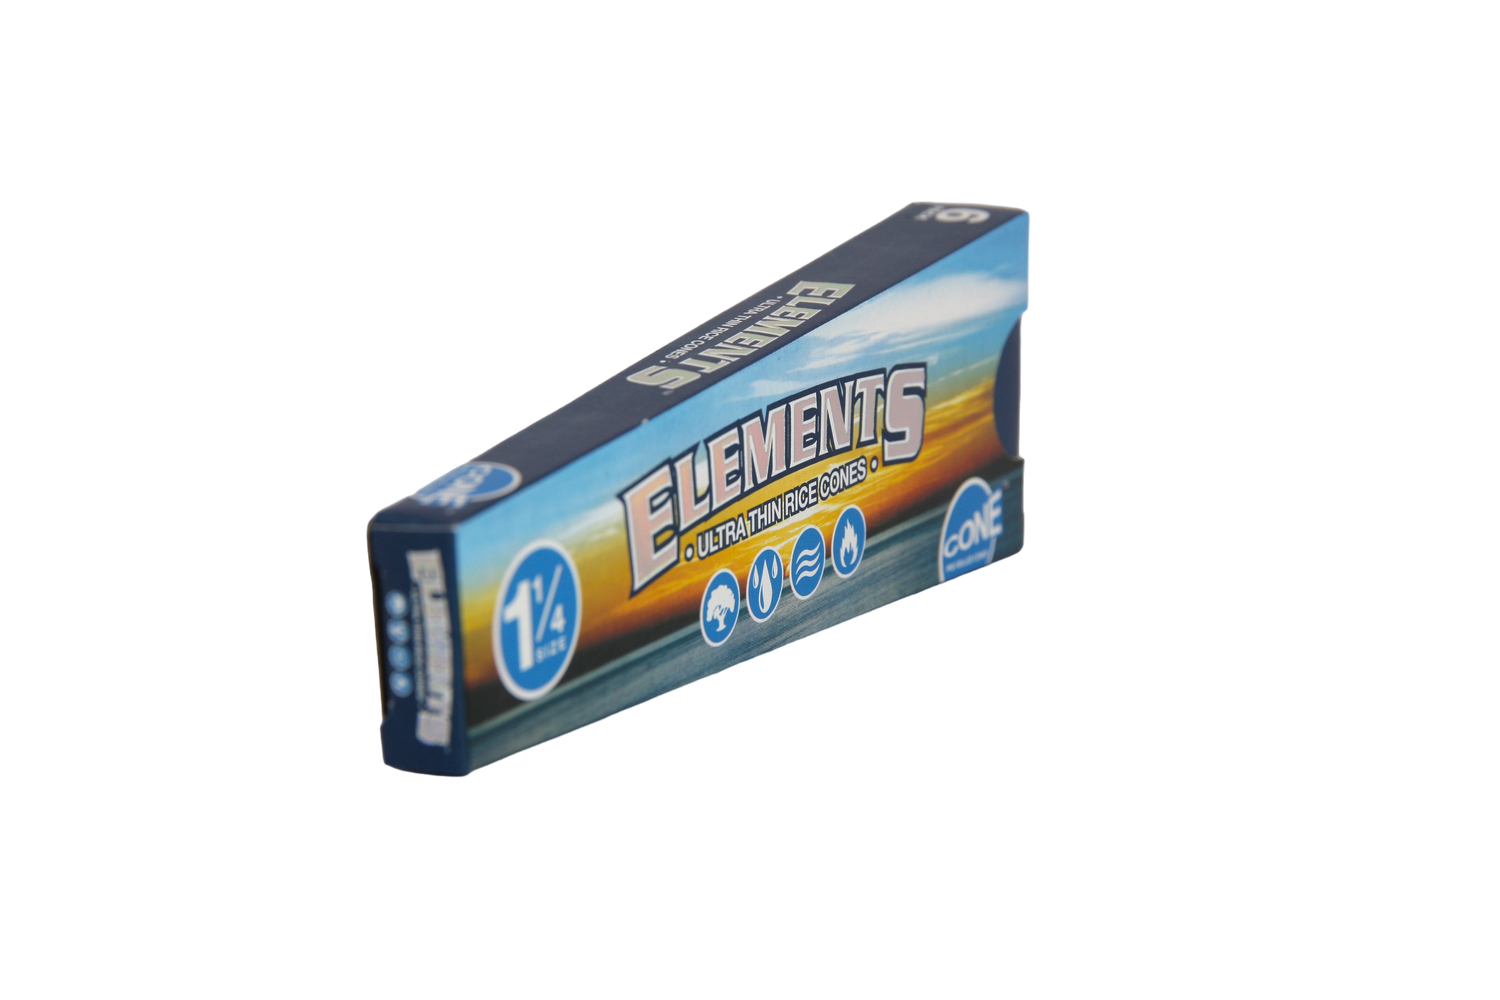 Elements Ultra Thin Cones - 1 1/4 6pk